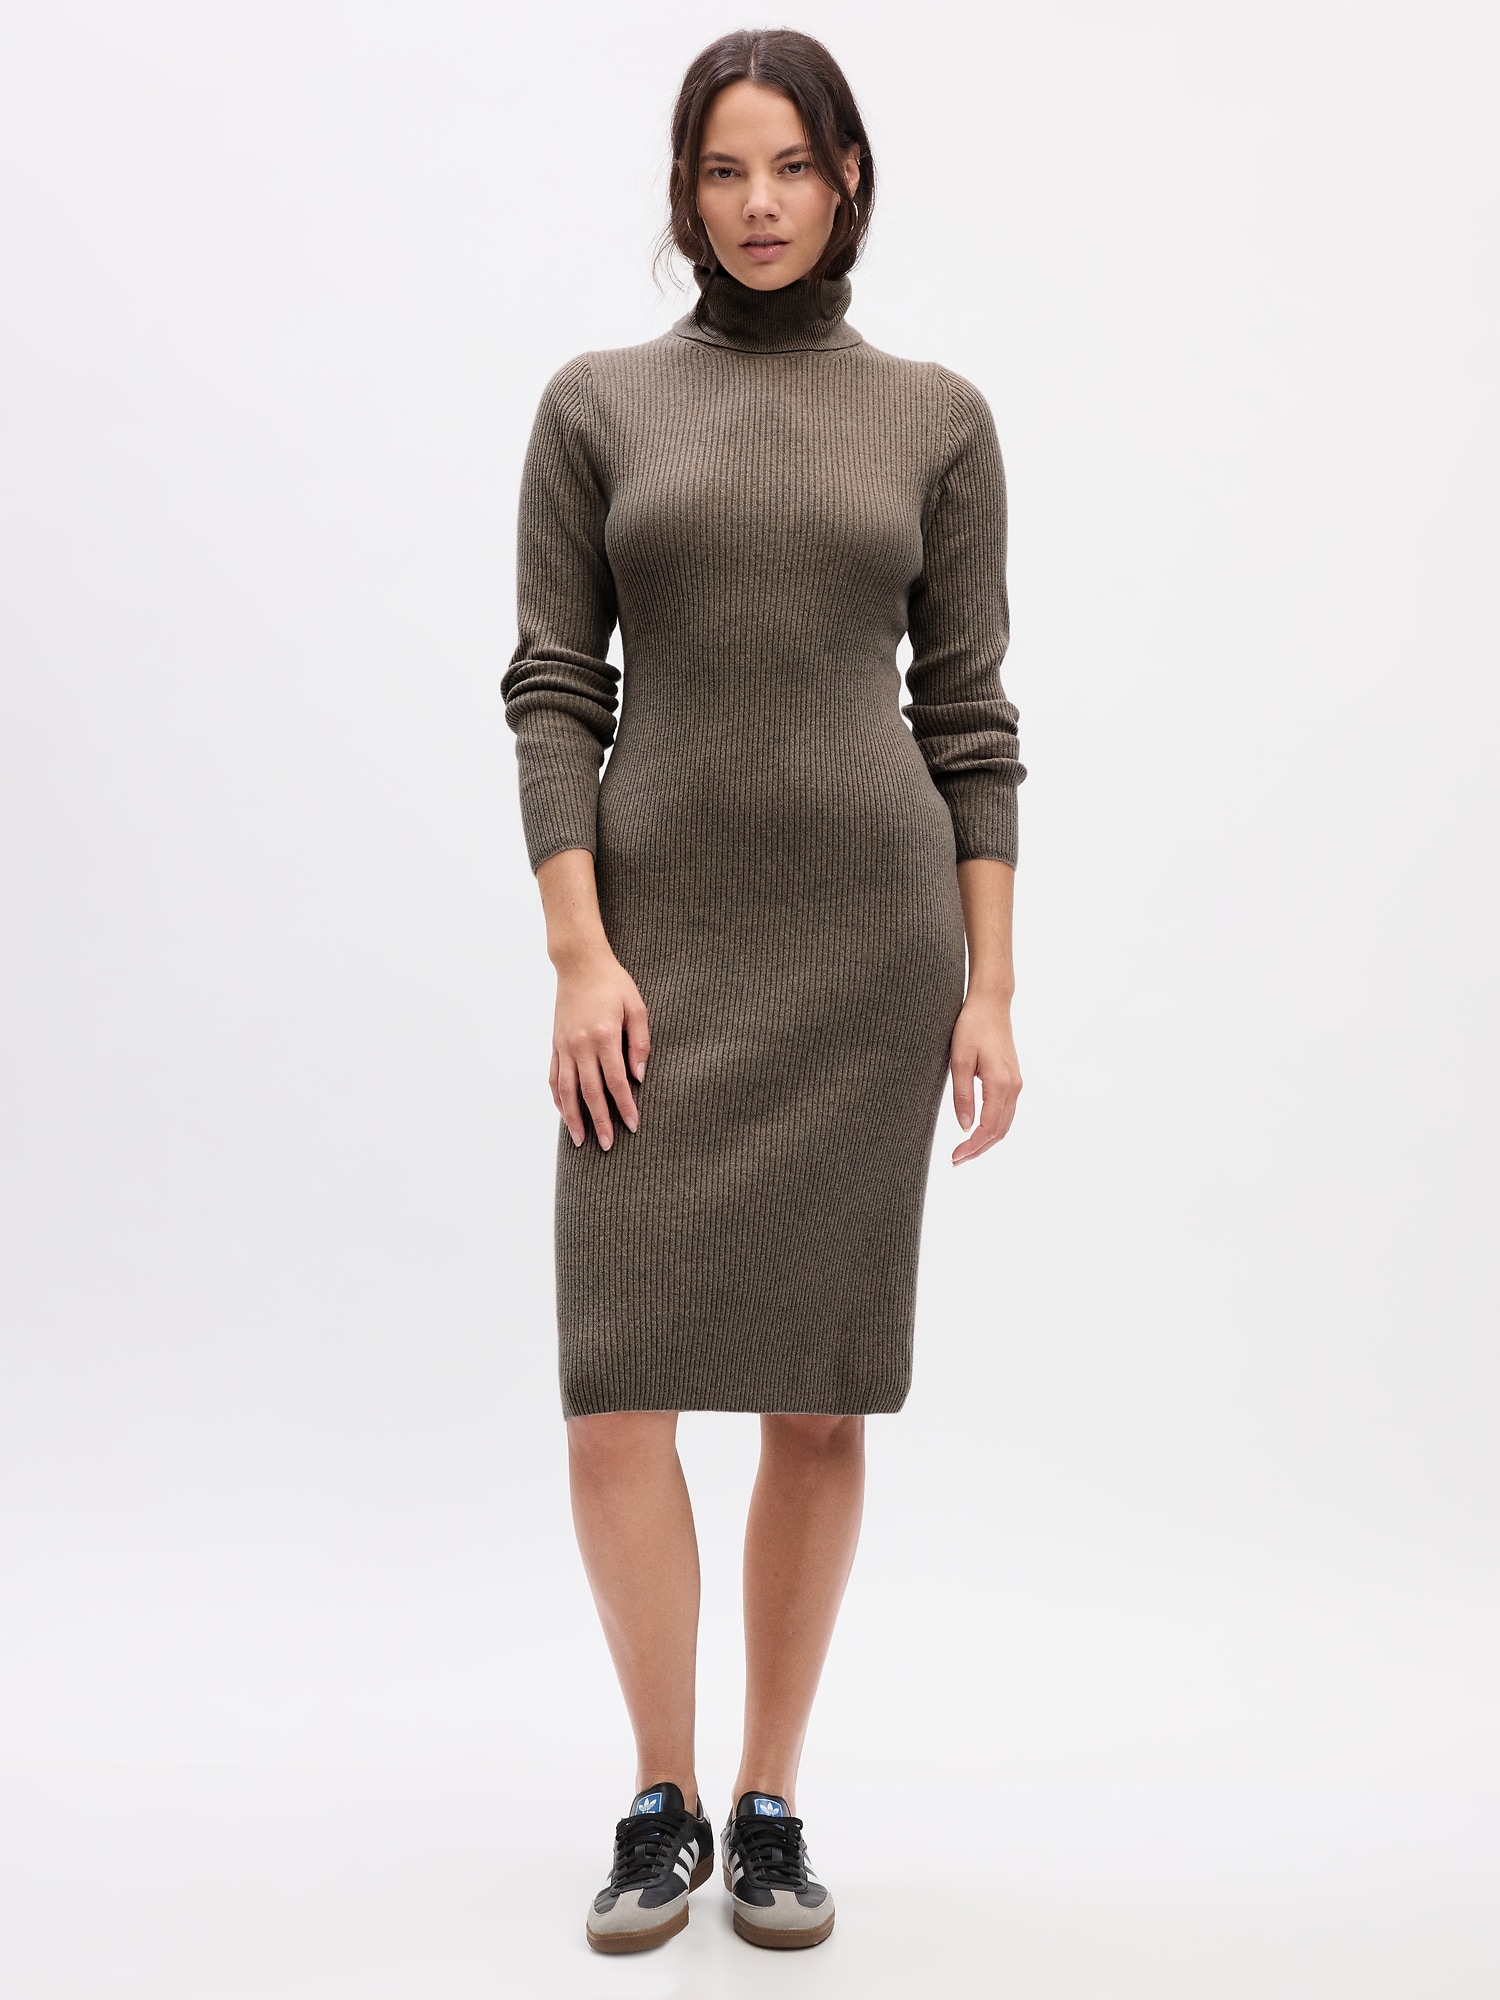 turtleneck sweater dress